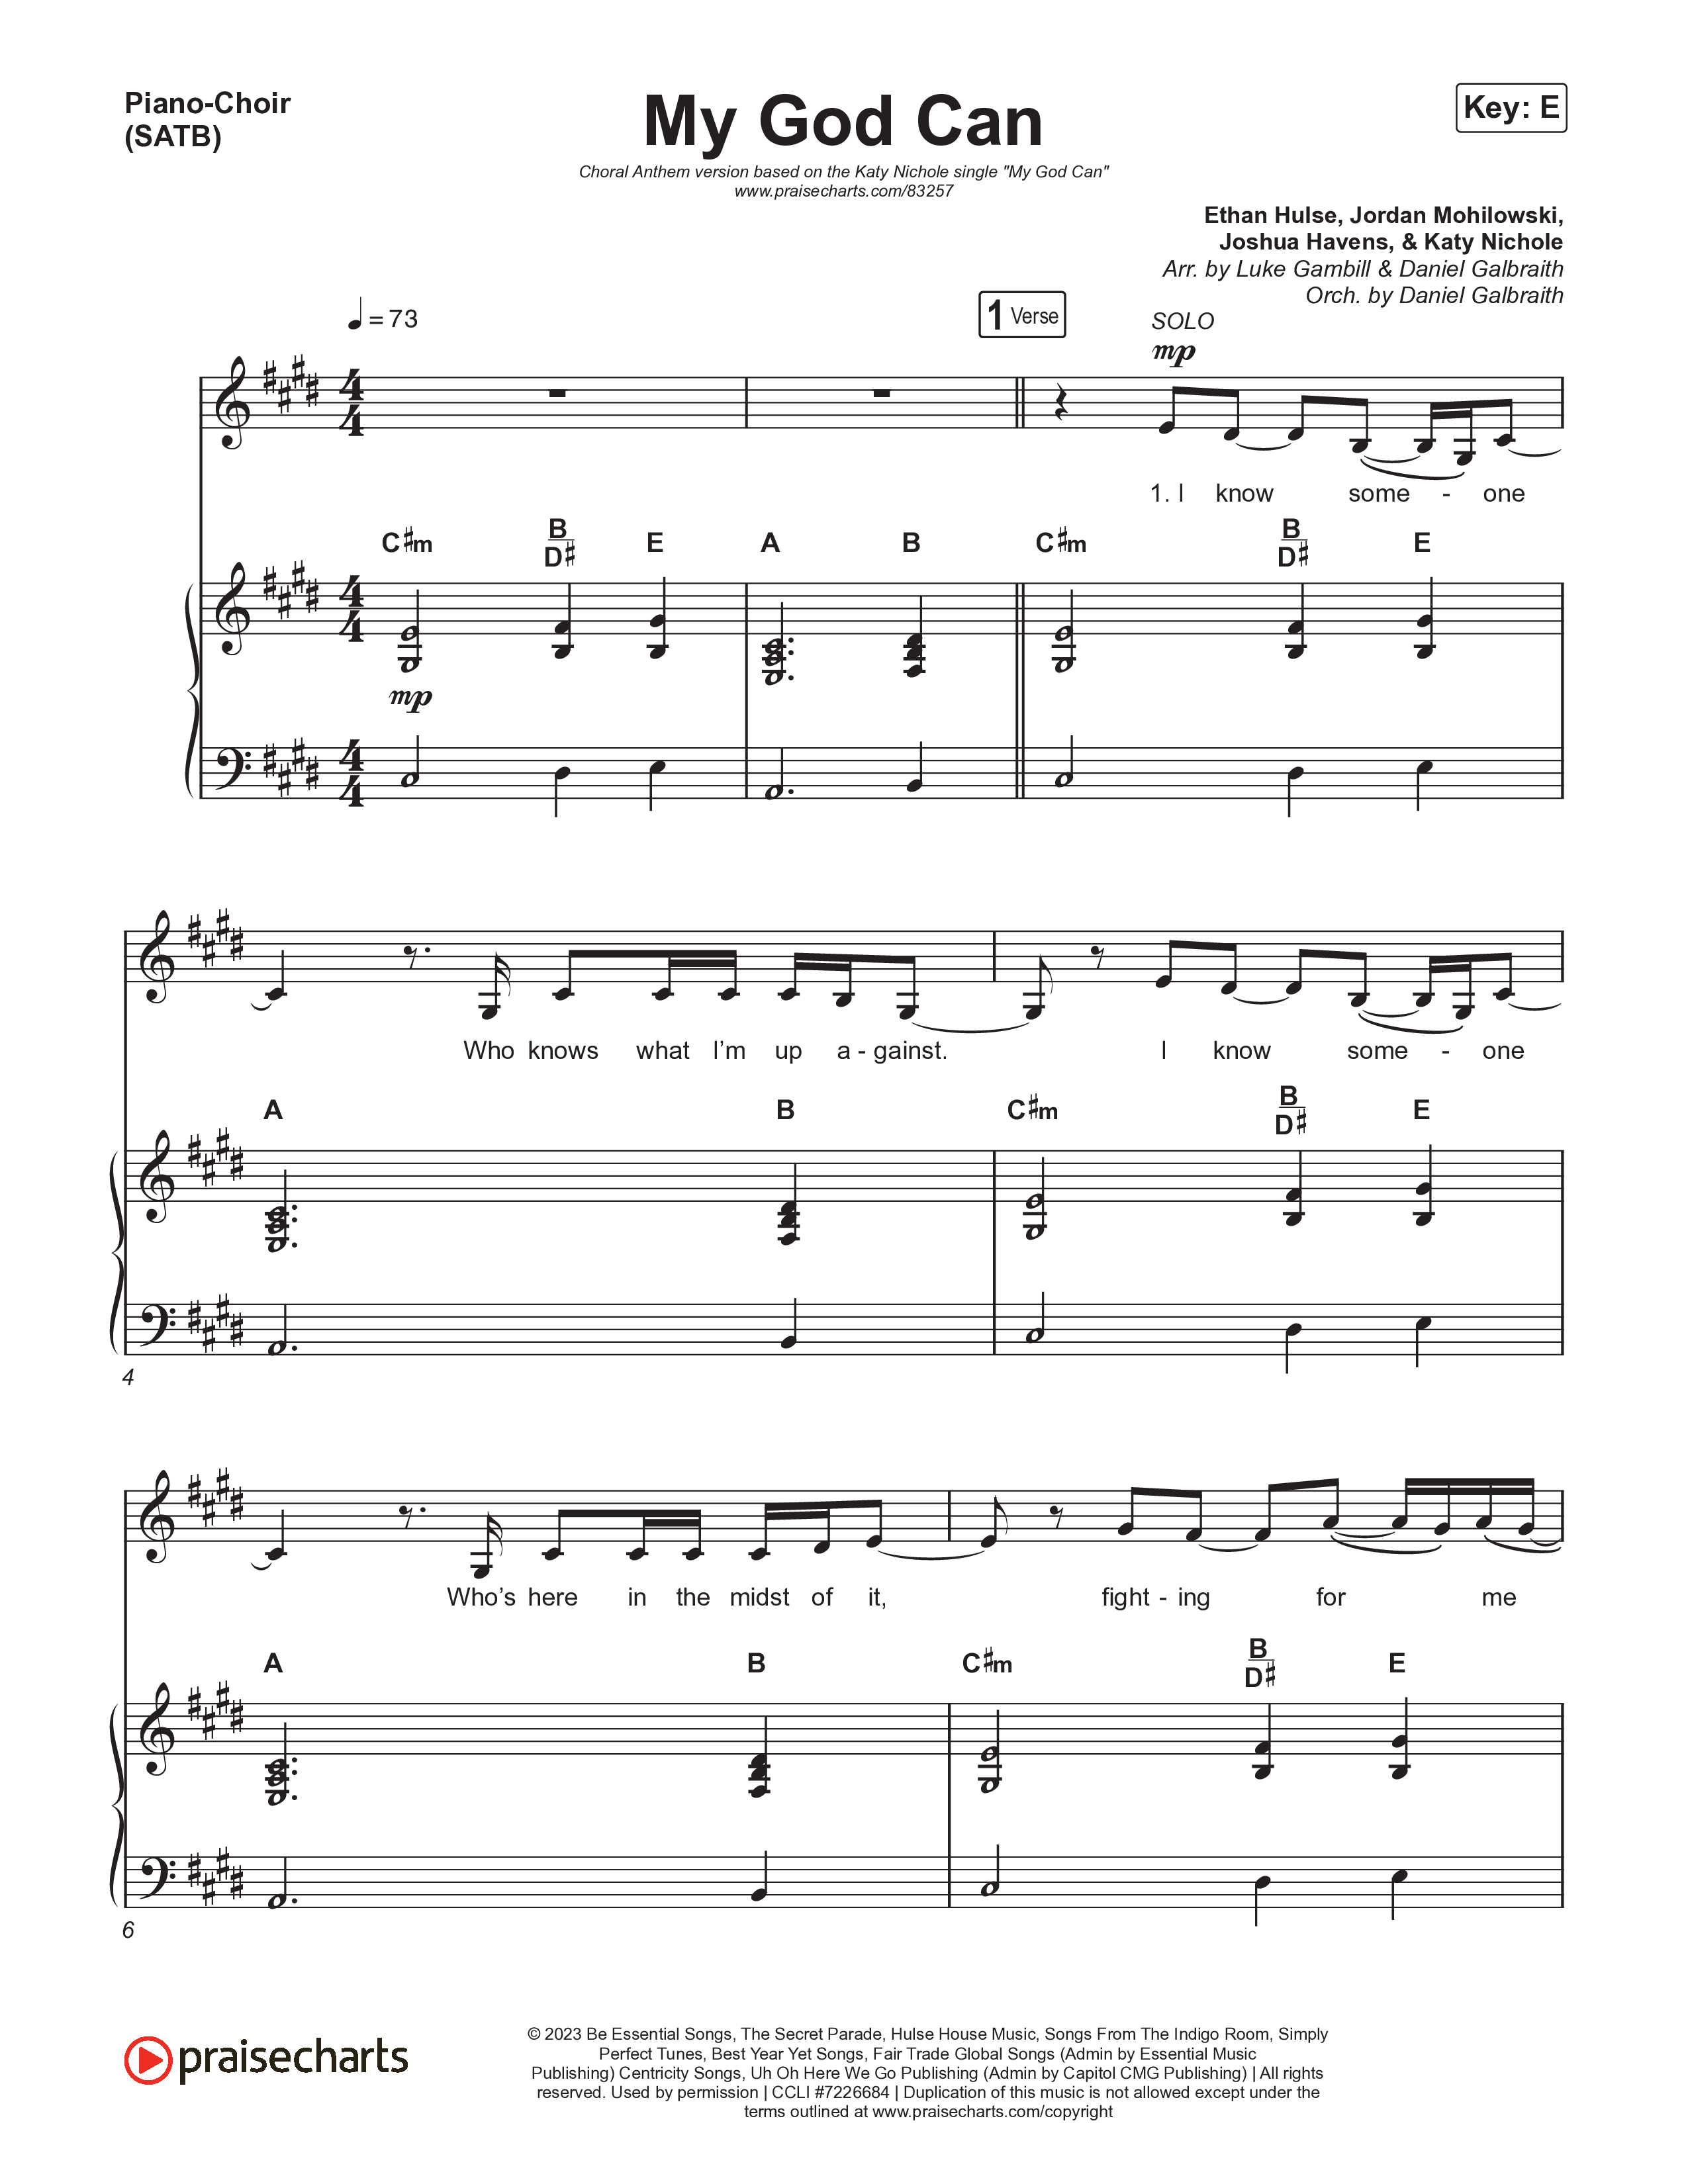 My God Can (Choral Anthem SATB) Piano/Vocal (SATB) (Katy Nichole / Naomi Raine / Arr. Luke Gambill)